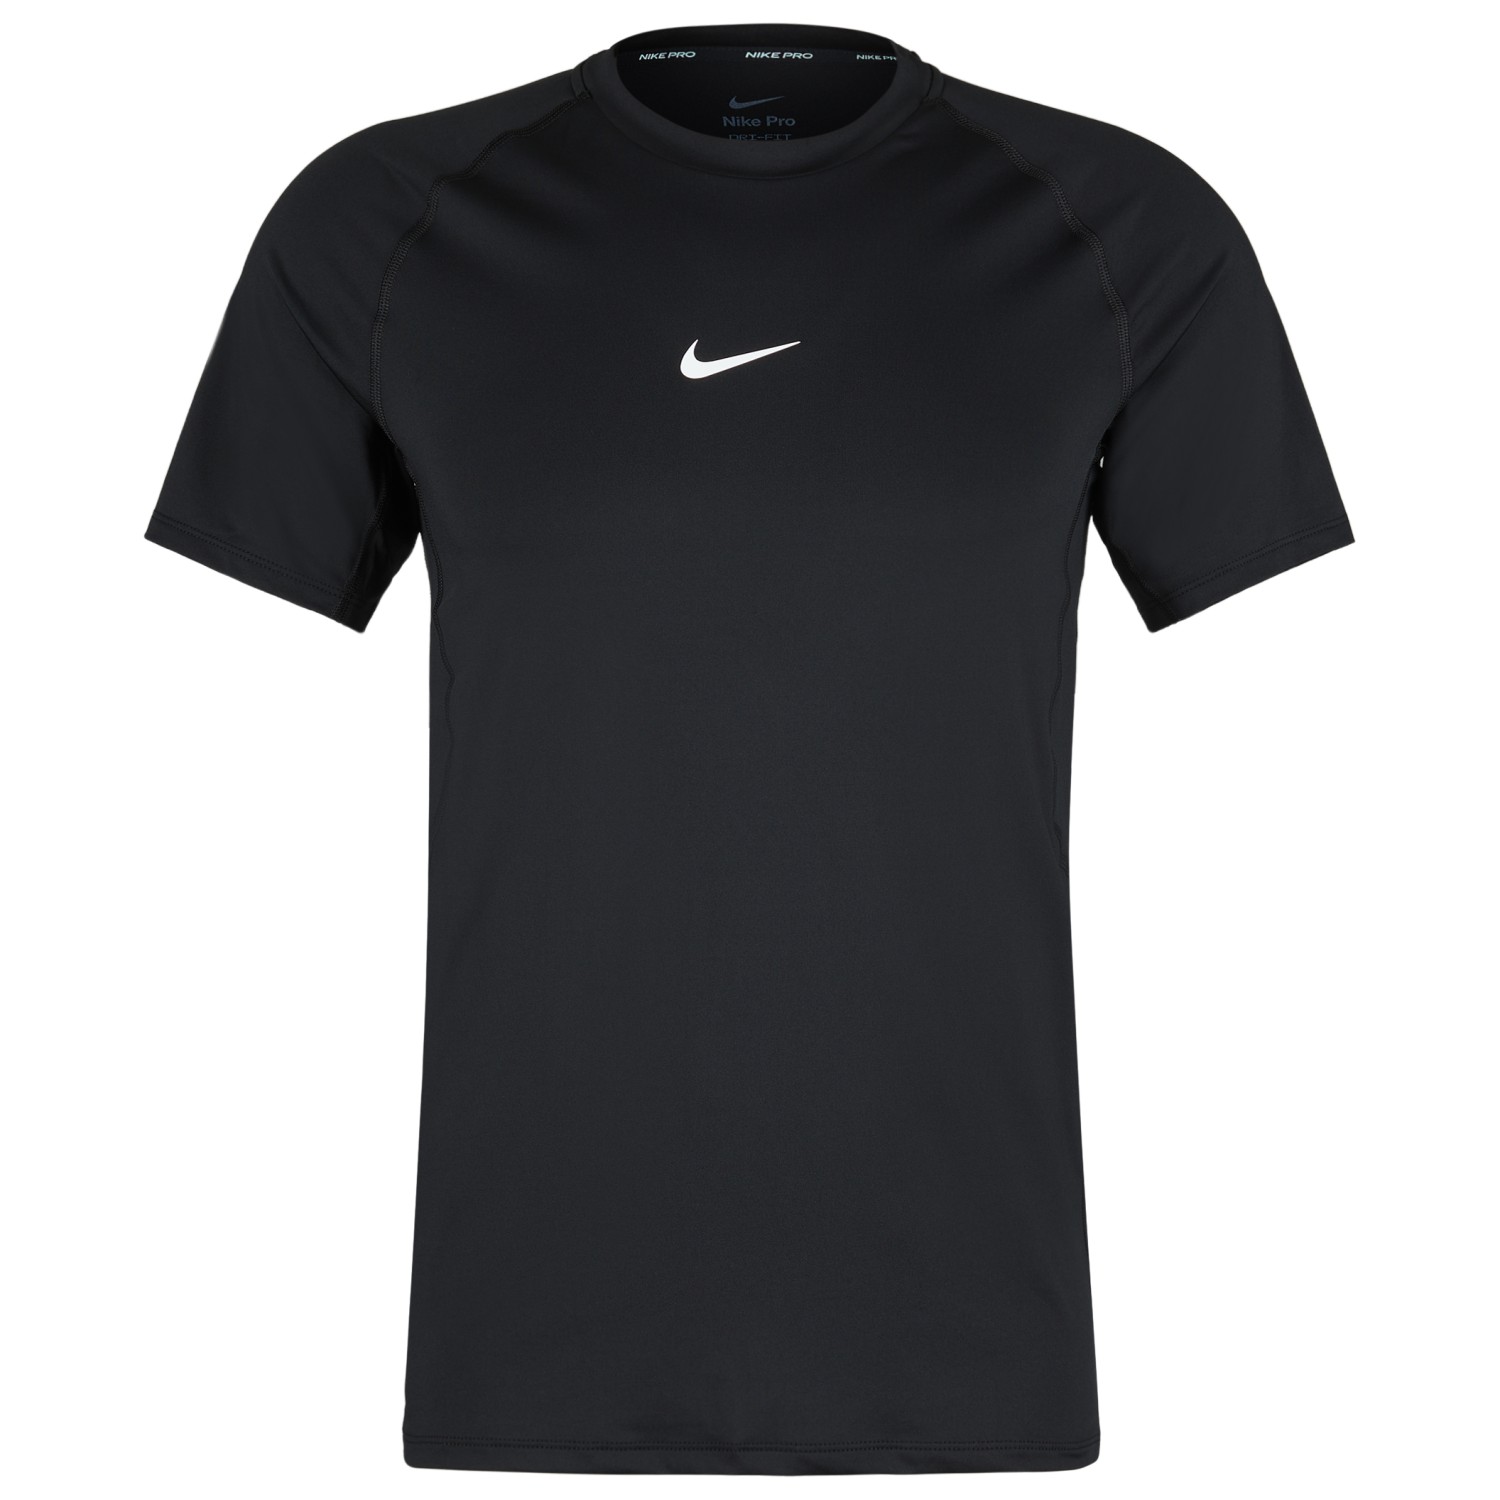 Функциональная рубашка Nike Pro Dri FIT Slim S/S, цвет Black/White поло nike силуэт прилегающий размер s черный